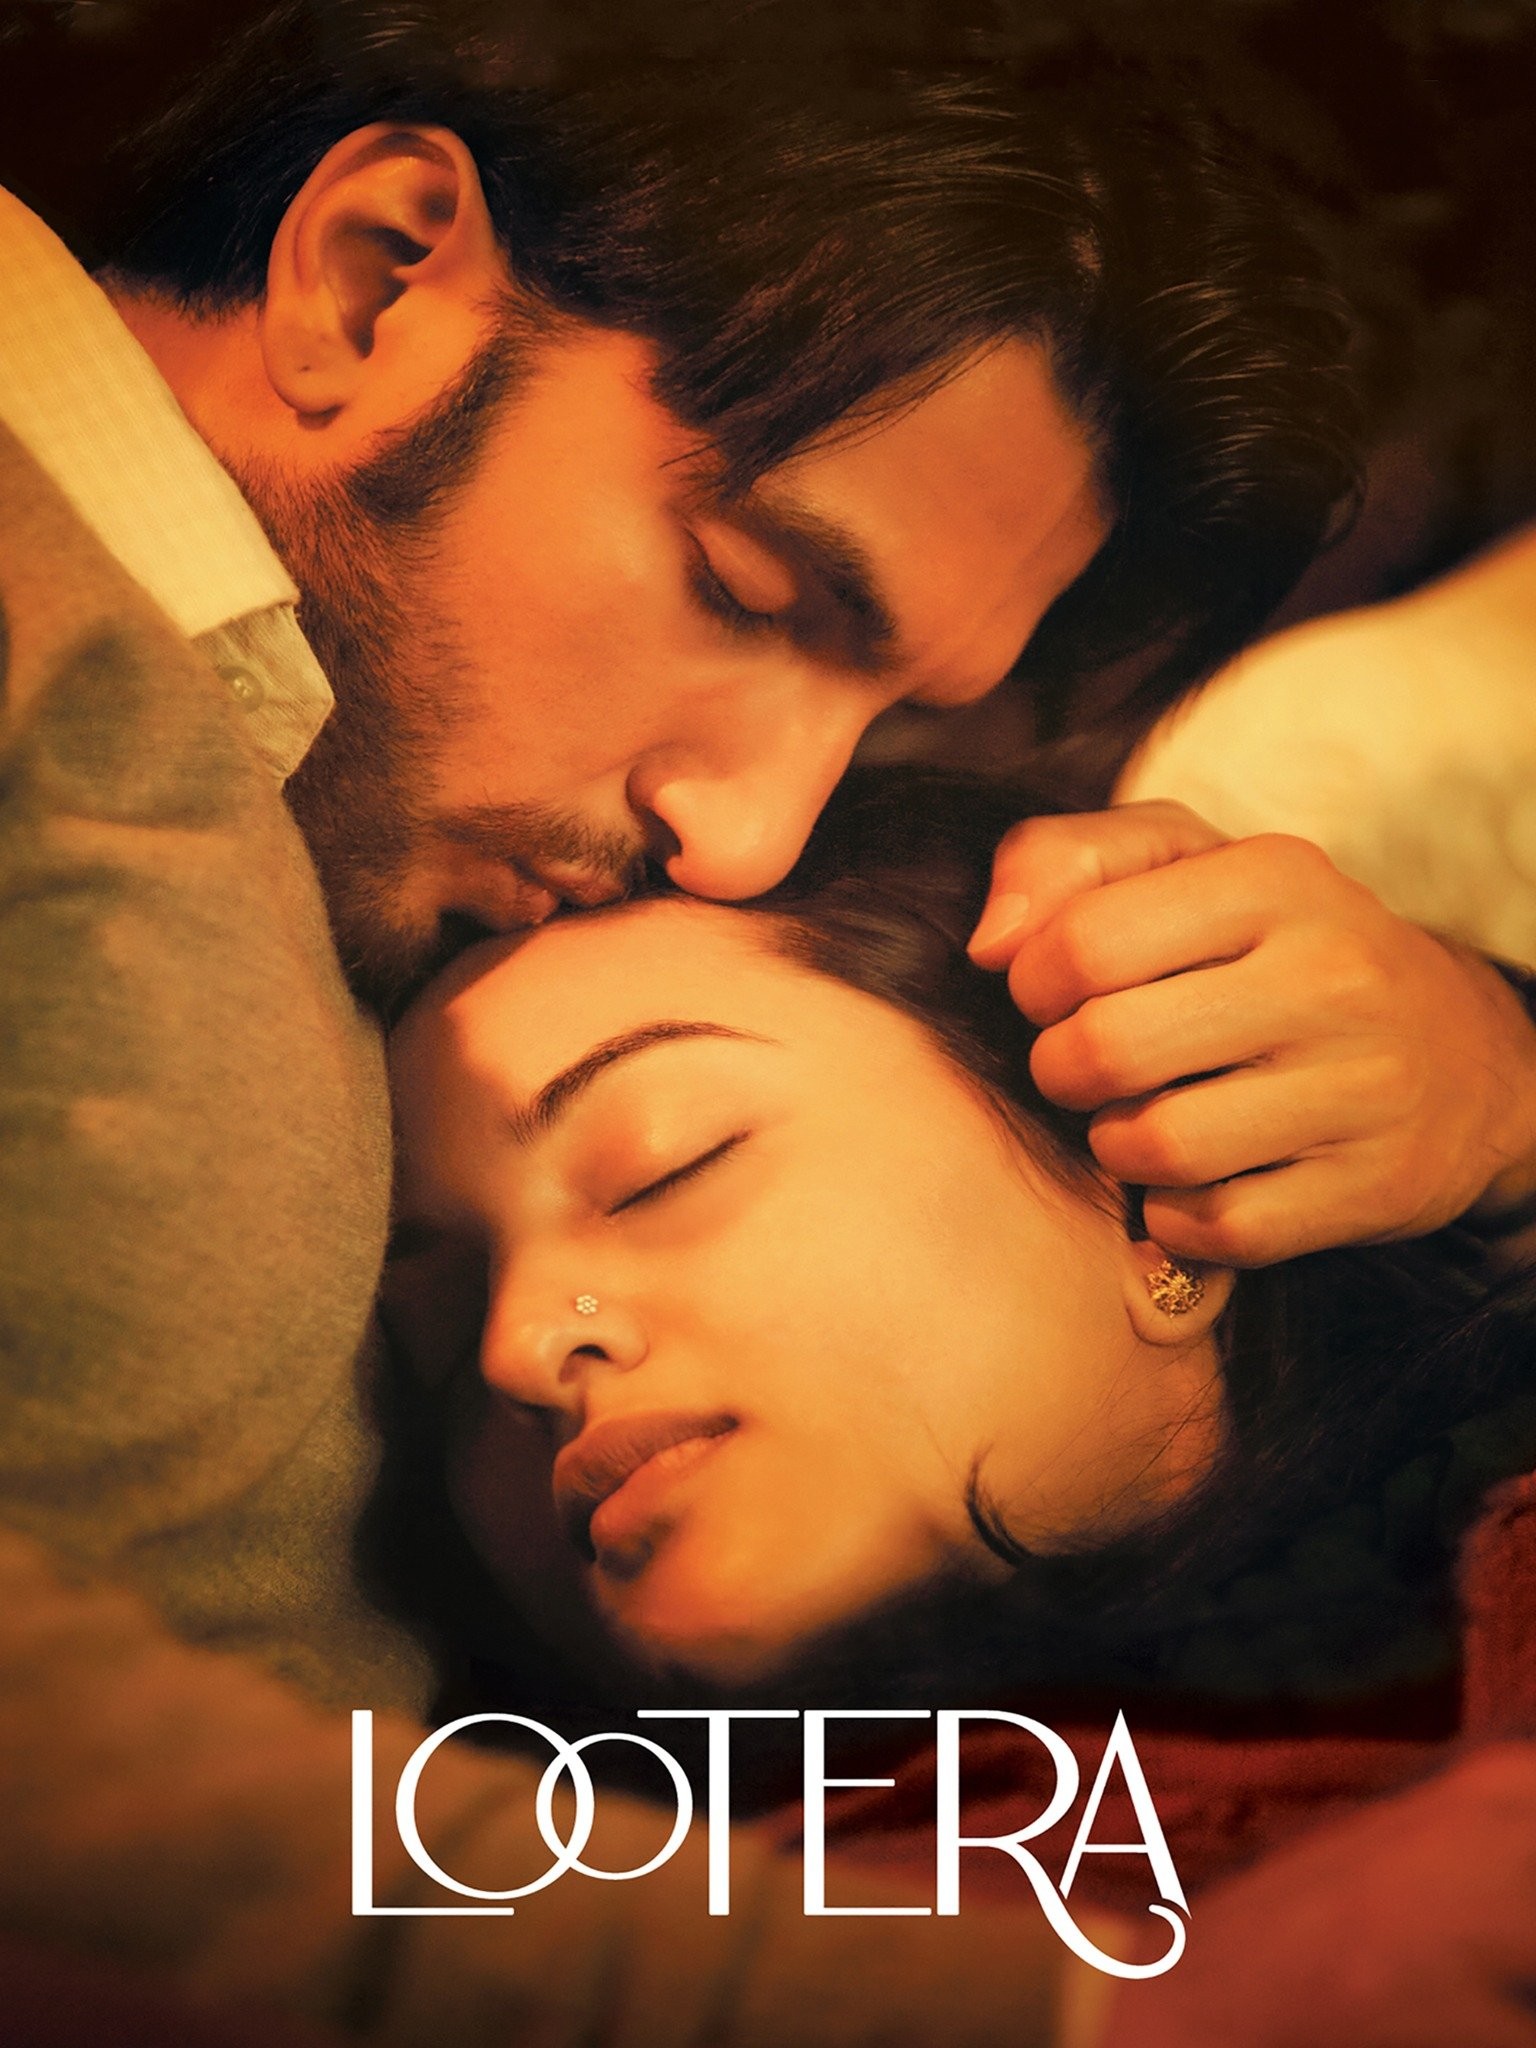 Lootera 2010 Full Movie Online - Watch HD Movies on Airtel Xstream Play